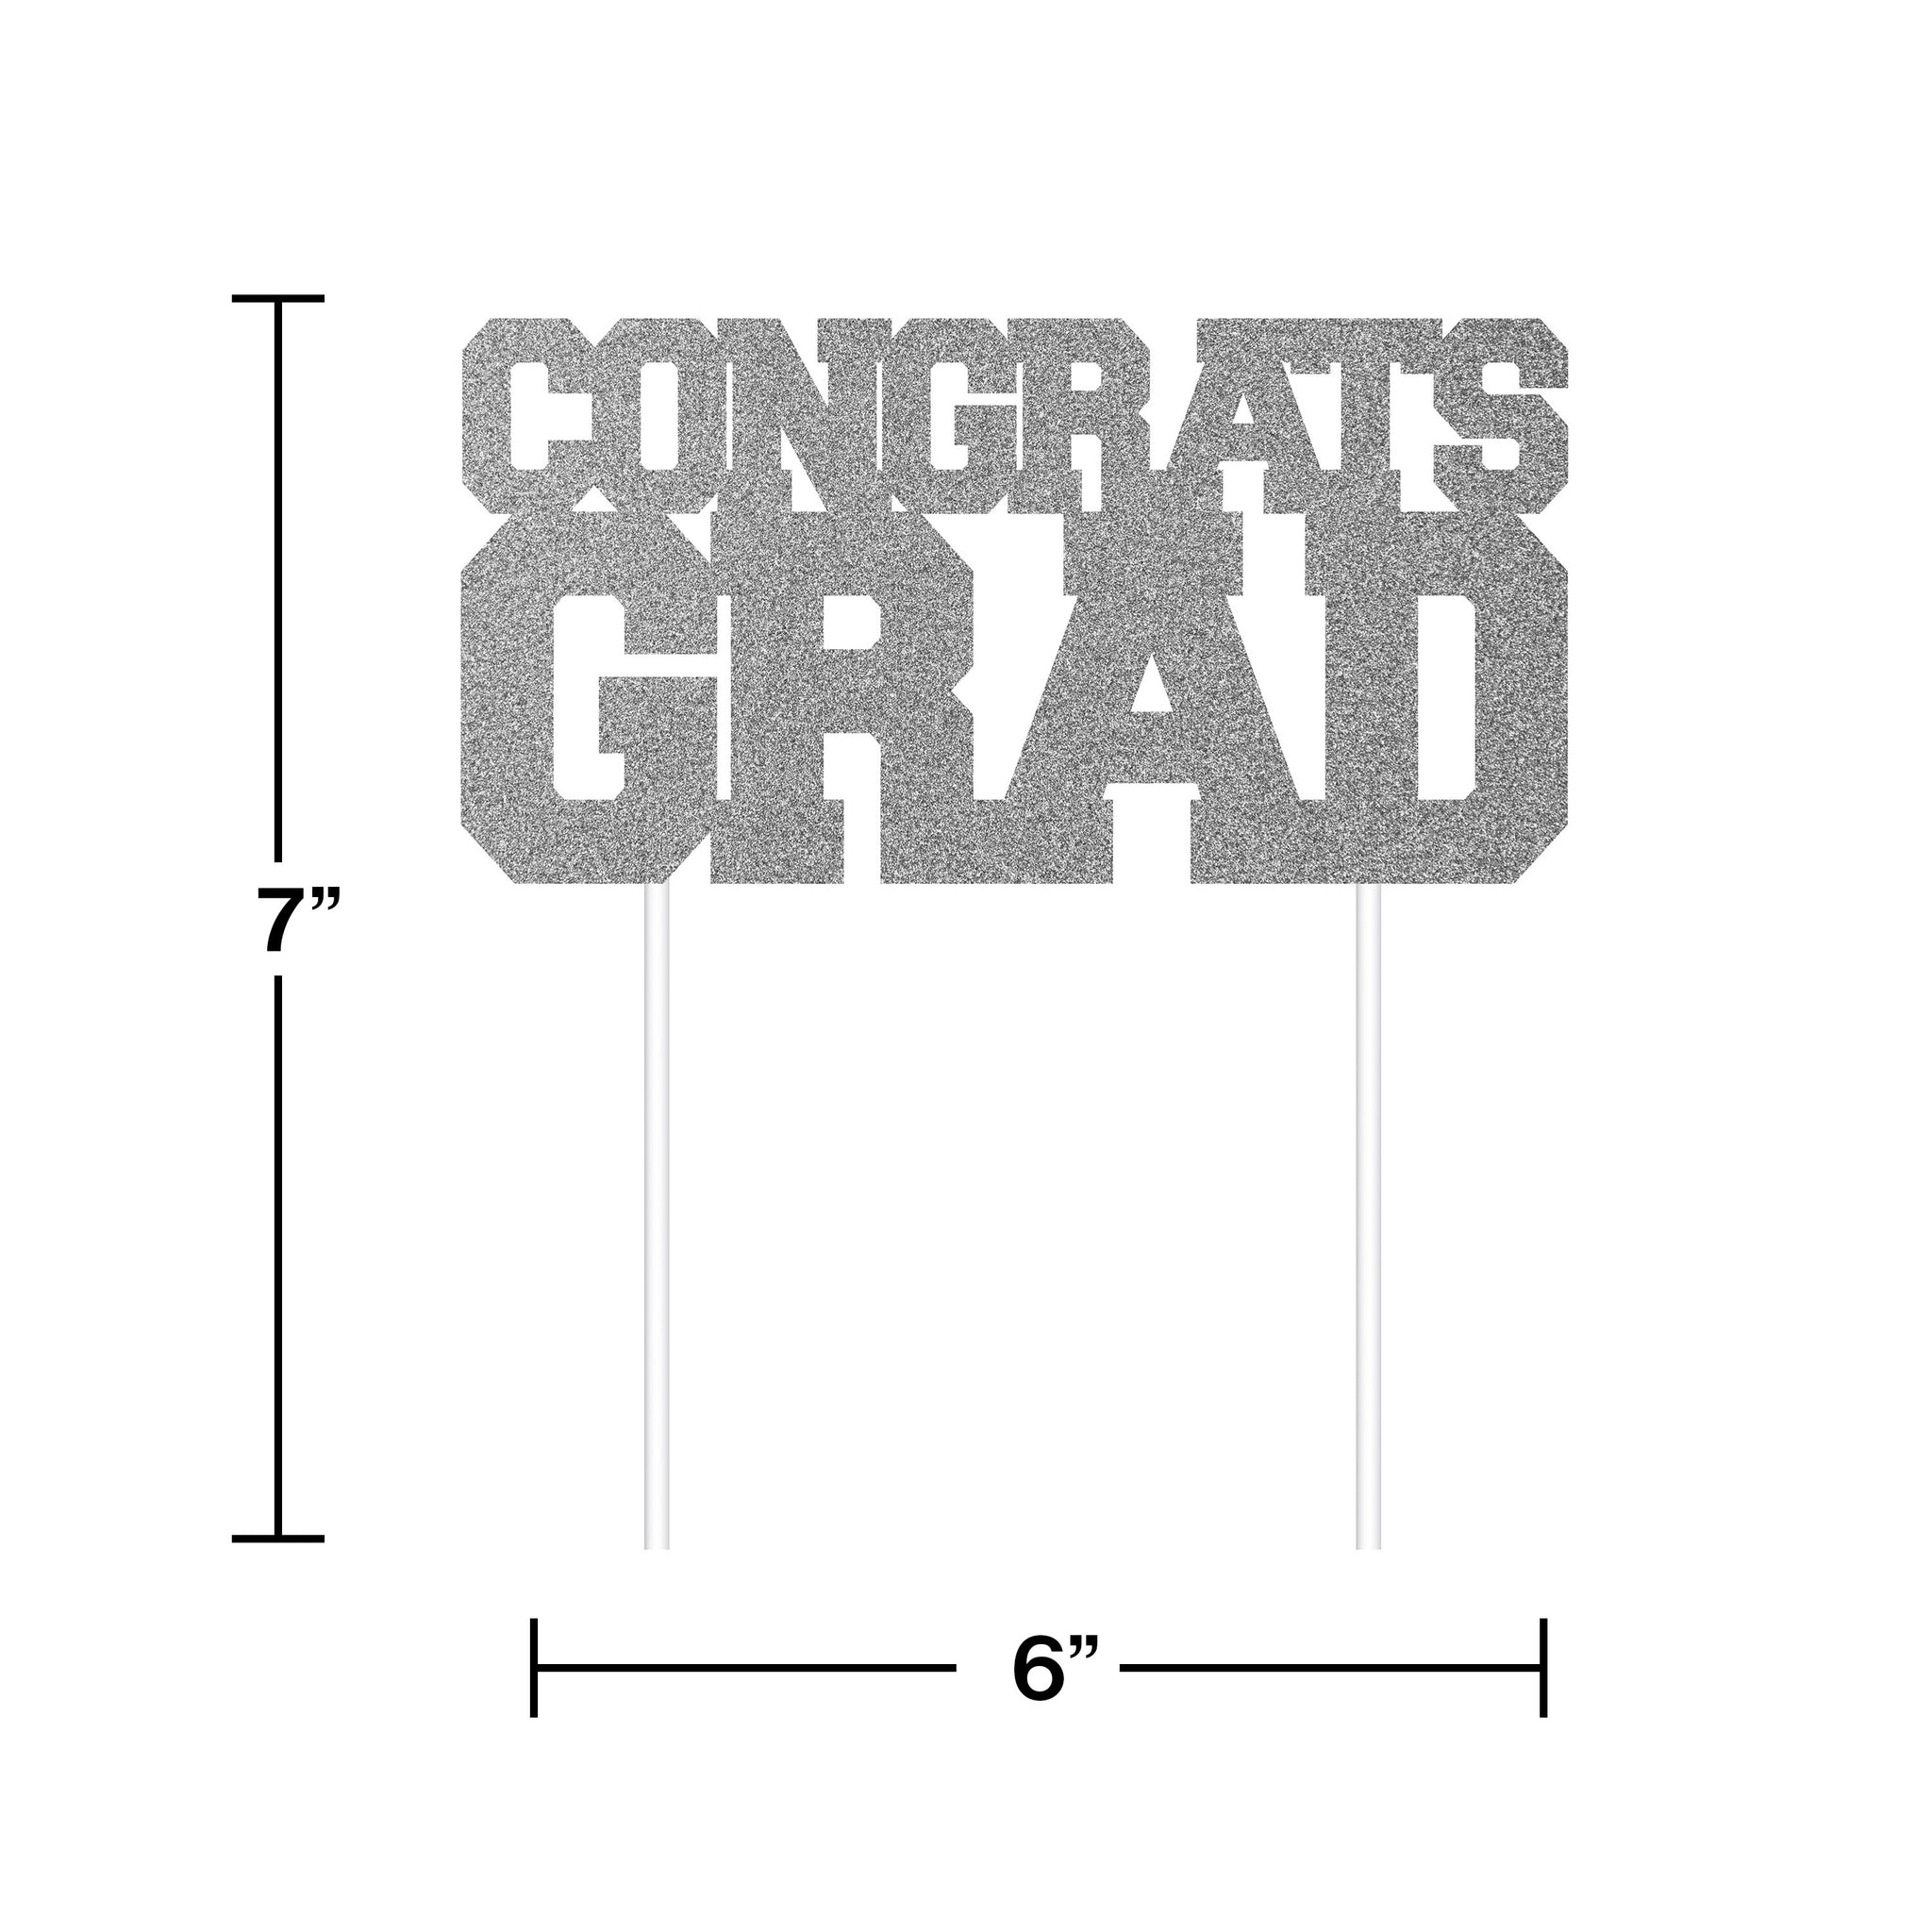 Silver Congrats Grad Cake Topper | Graduation